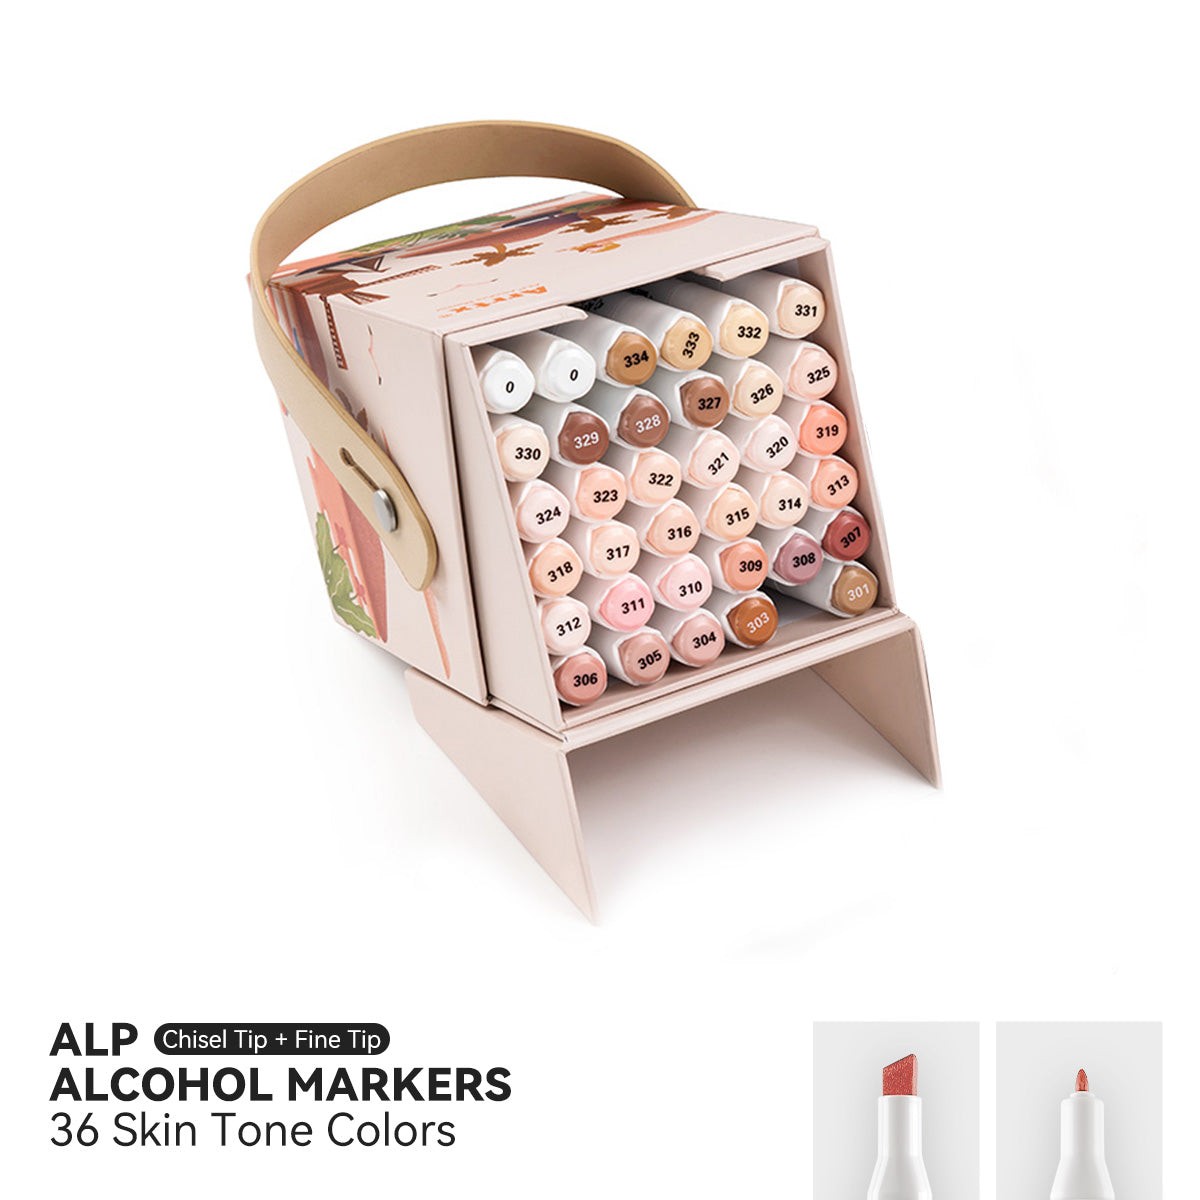 Arrtx ALP Skin Tone 36 Colors Alcohol Markers